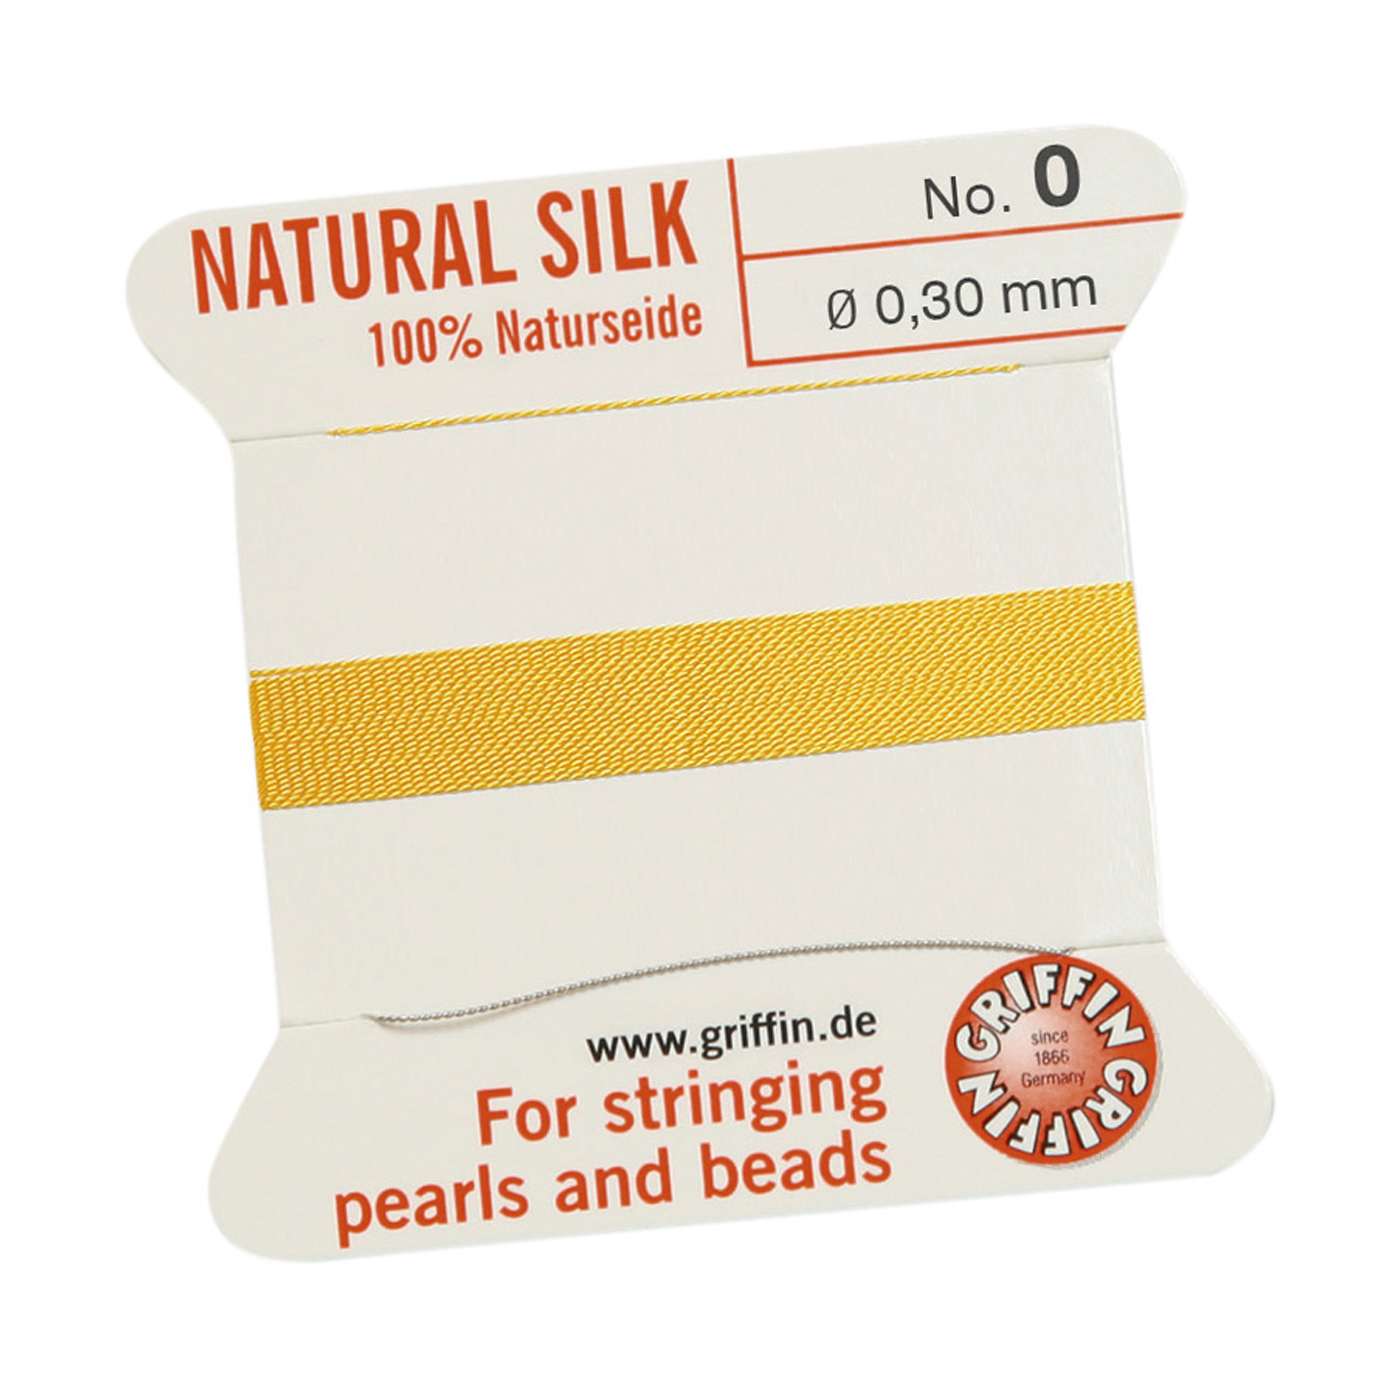 Bead Cord 100% Natural Silk, Light Yellow, No. 0 - 2 m